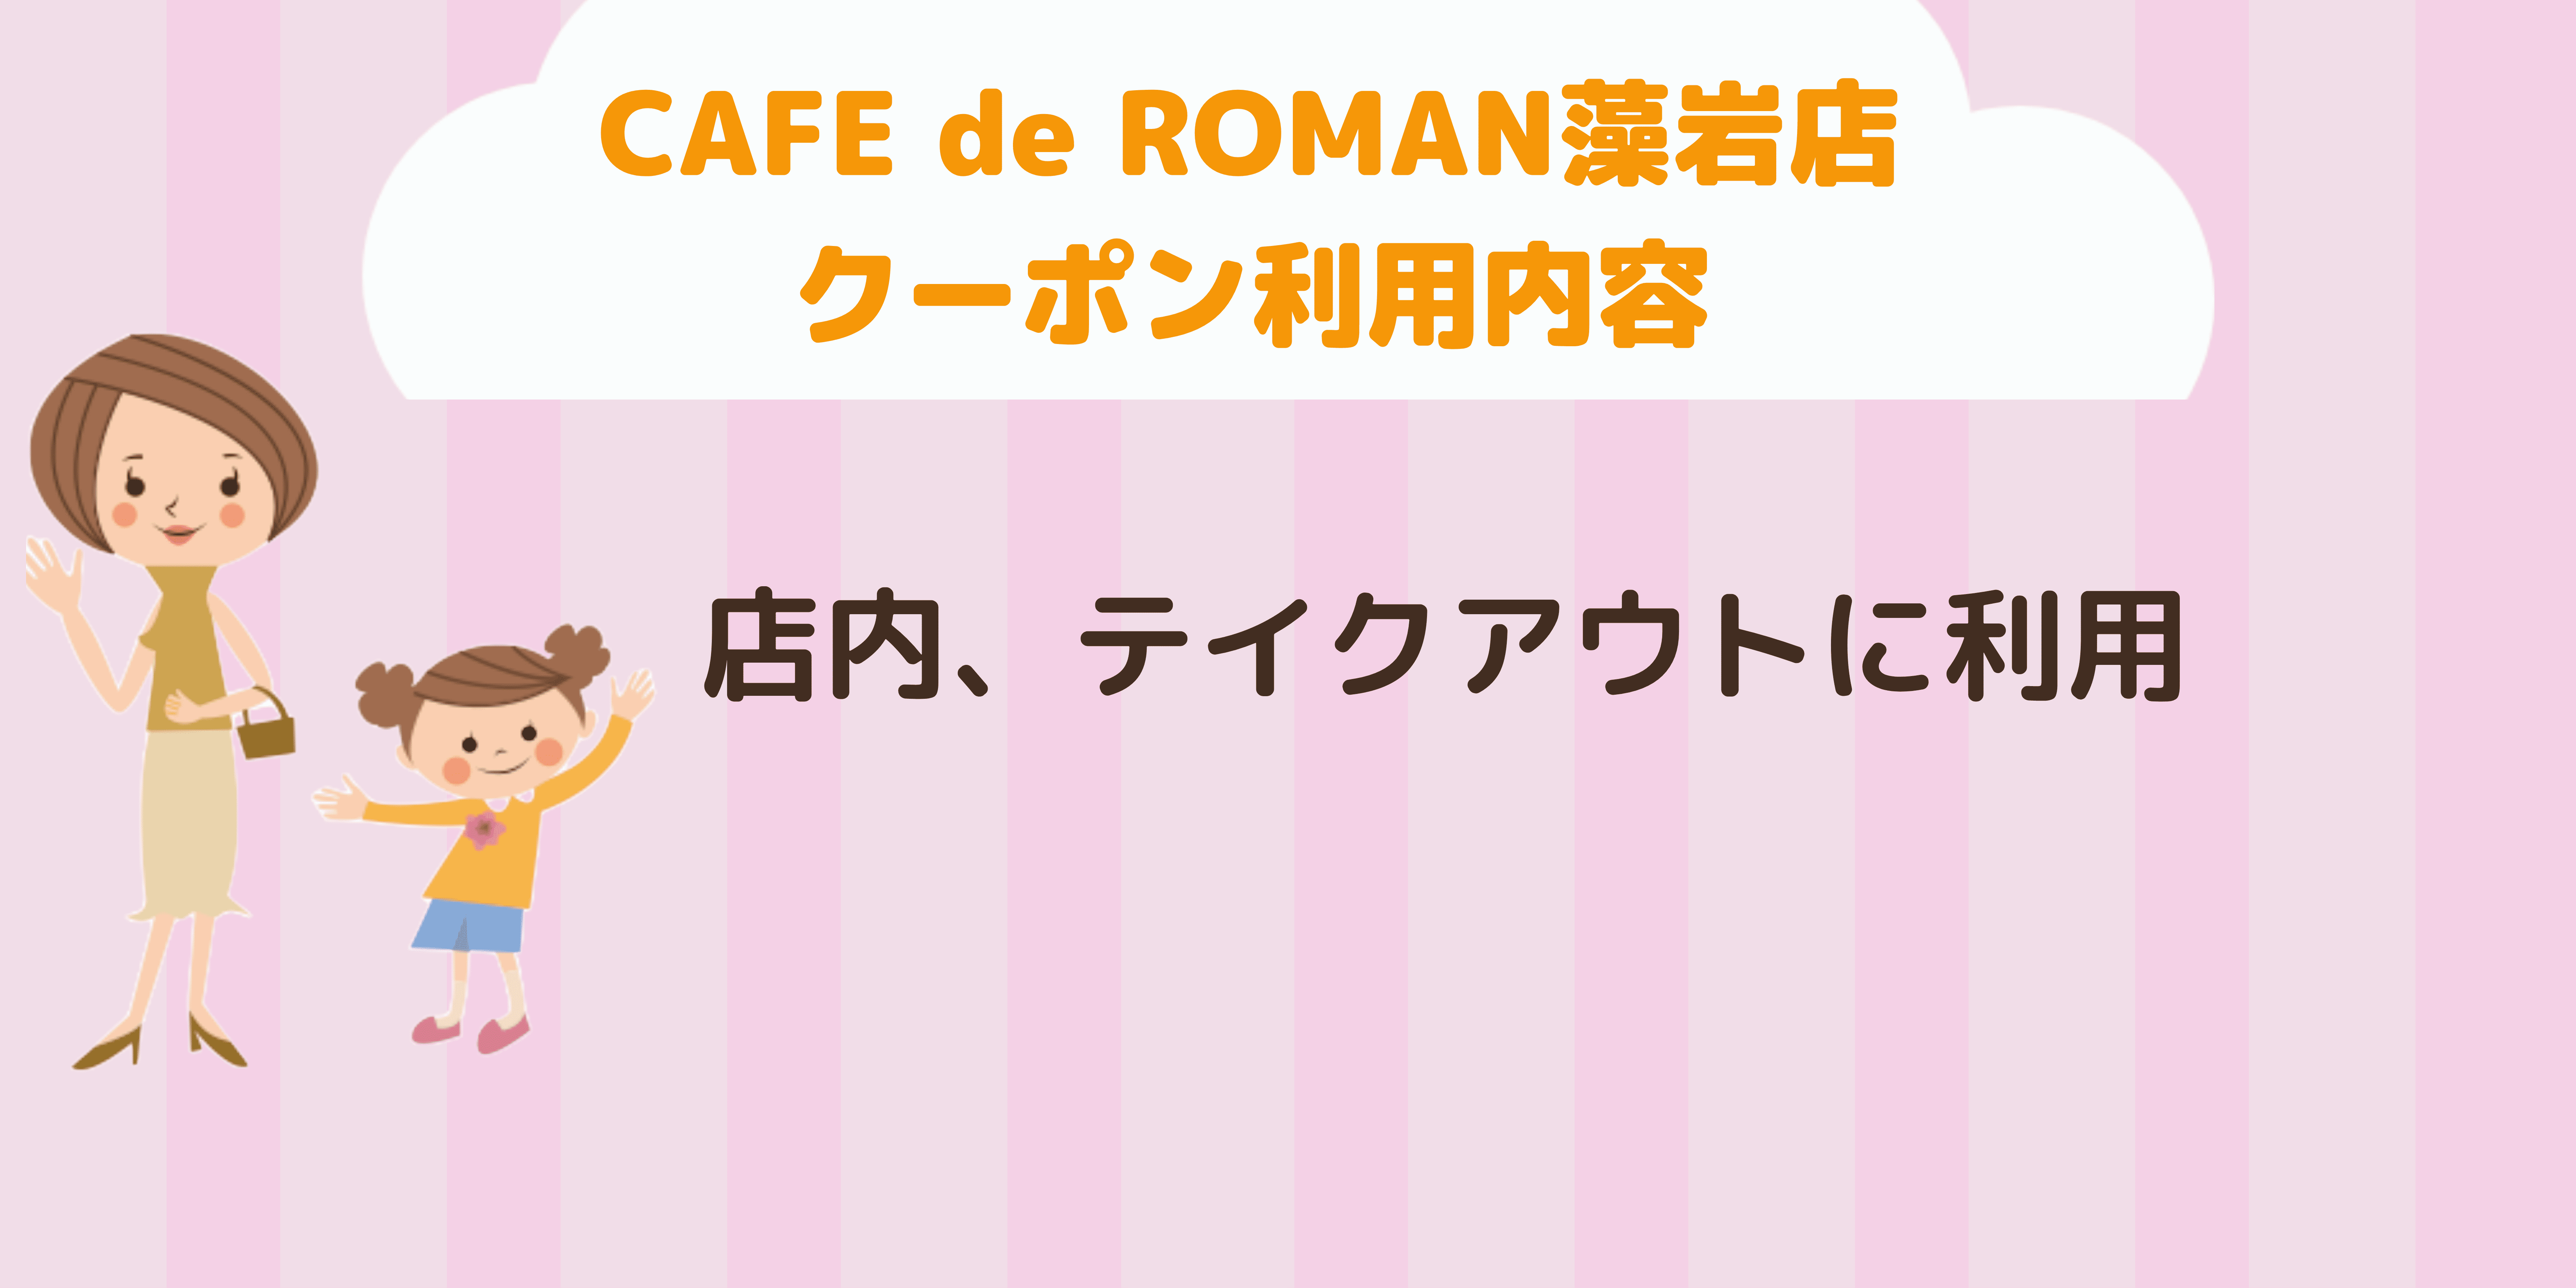 CAFE de ROMAN藻岩店